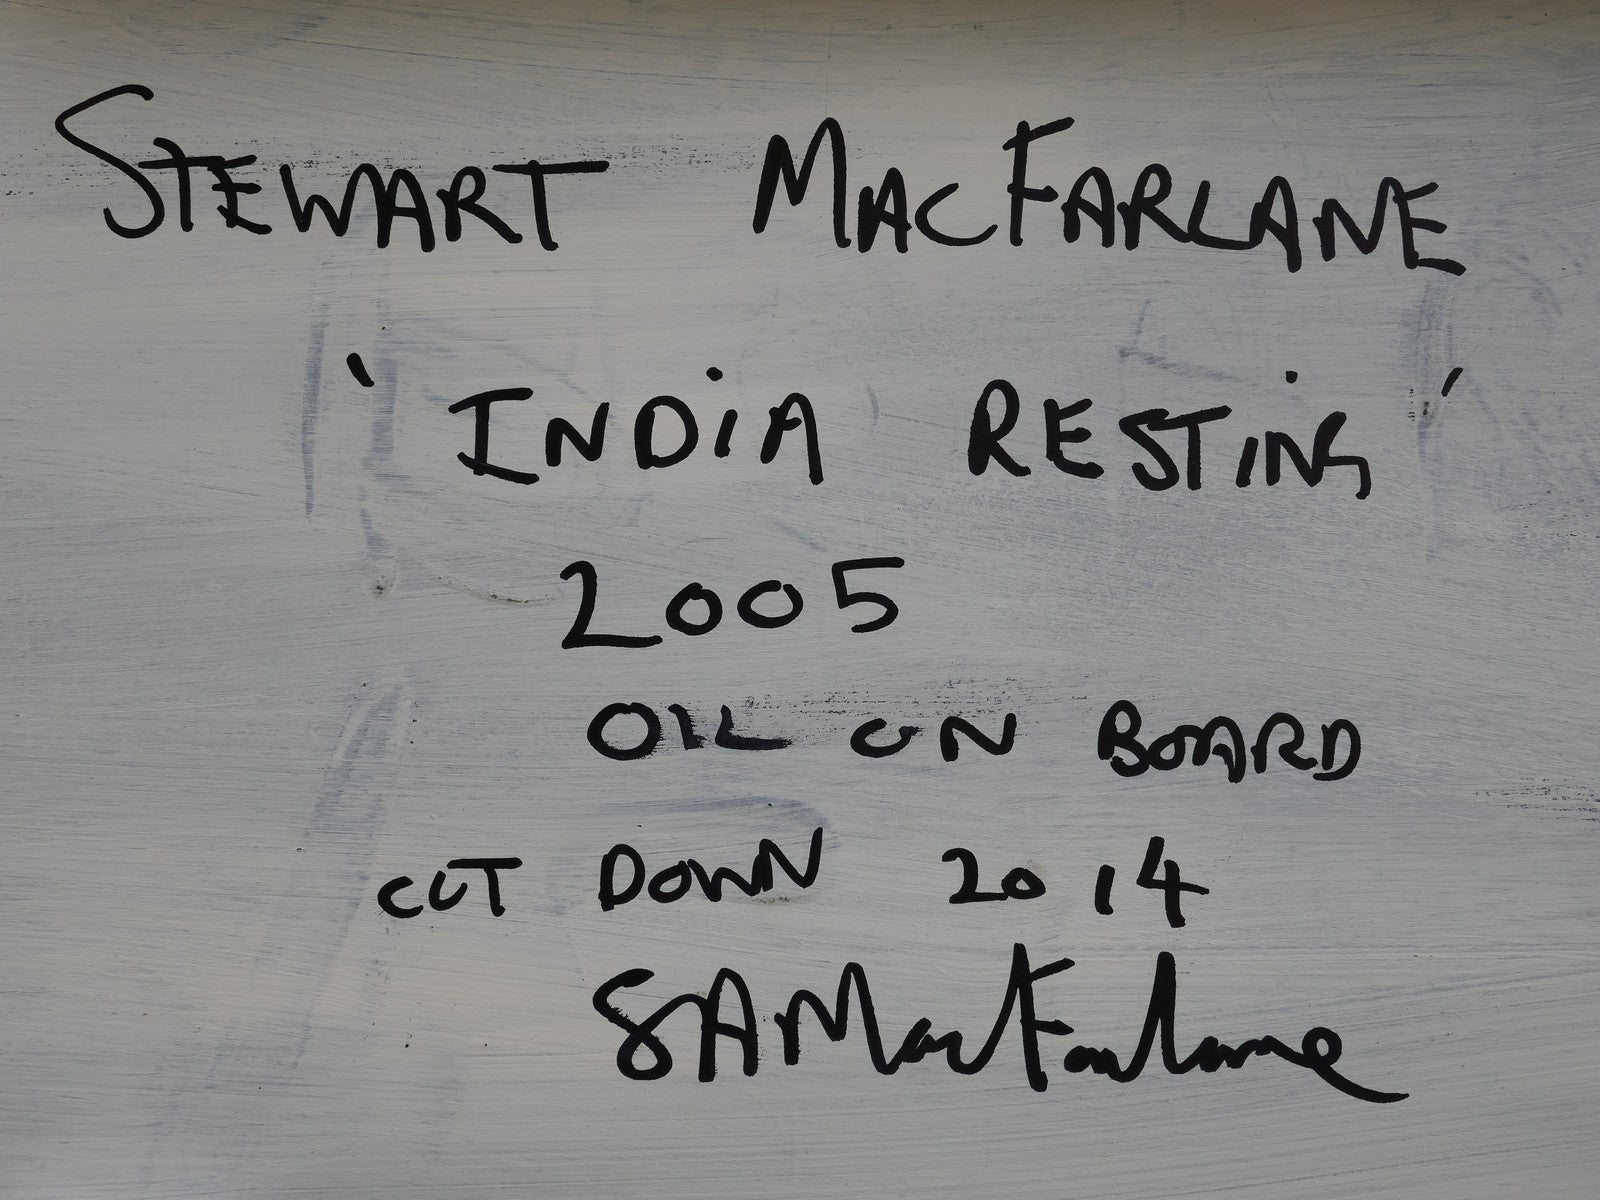 Stewart MacFarlane 'India Resting'